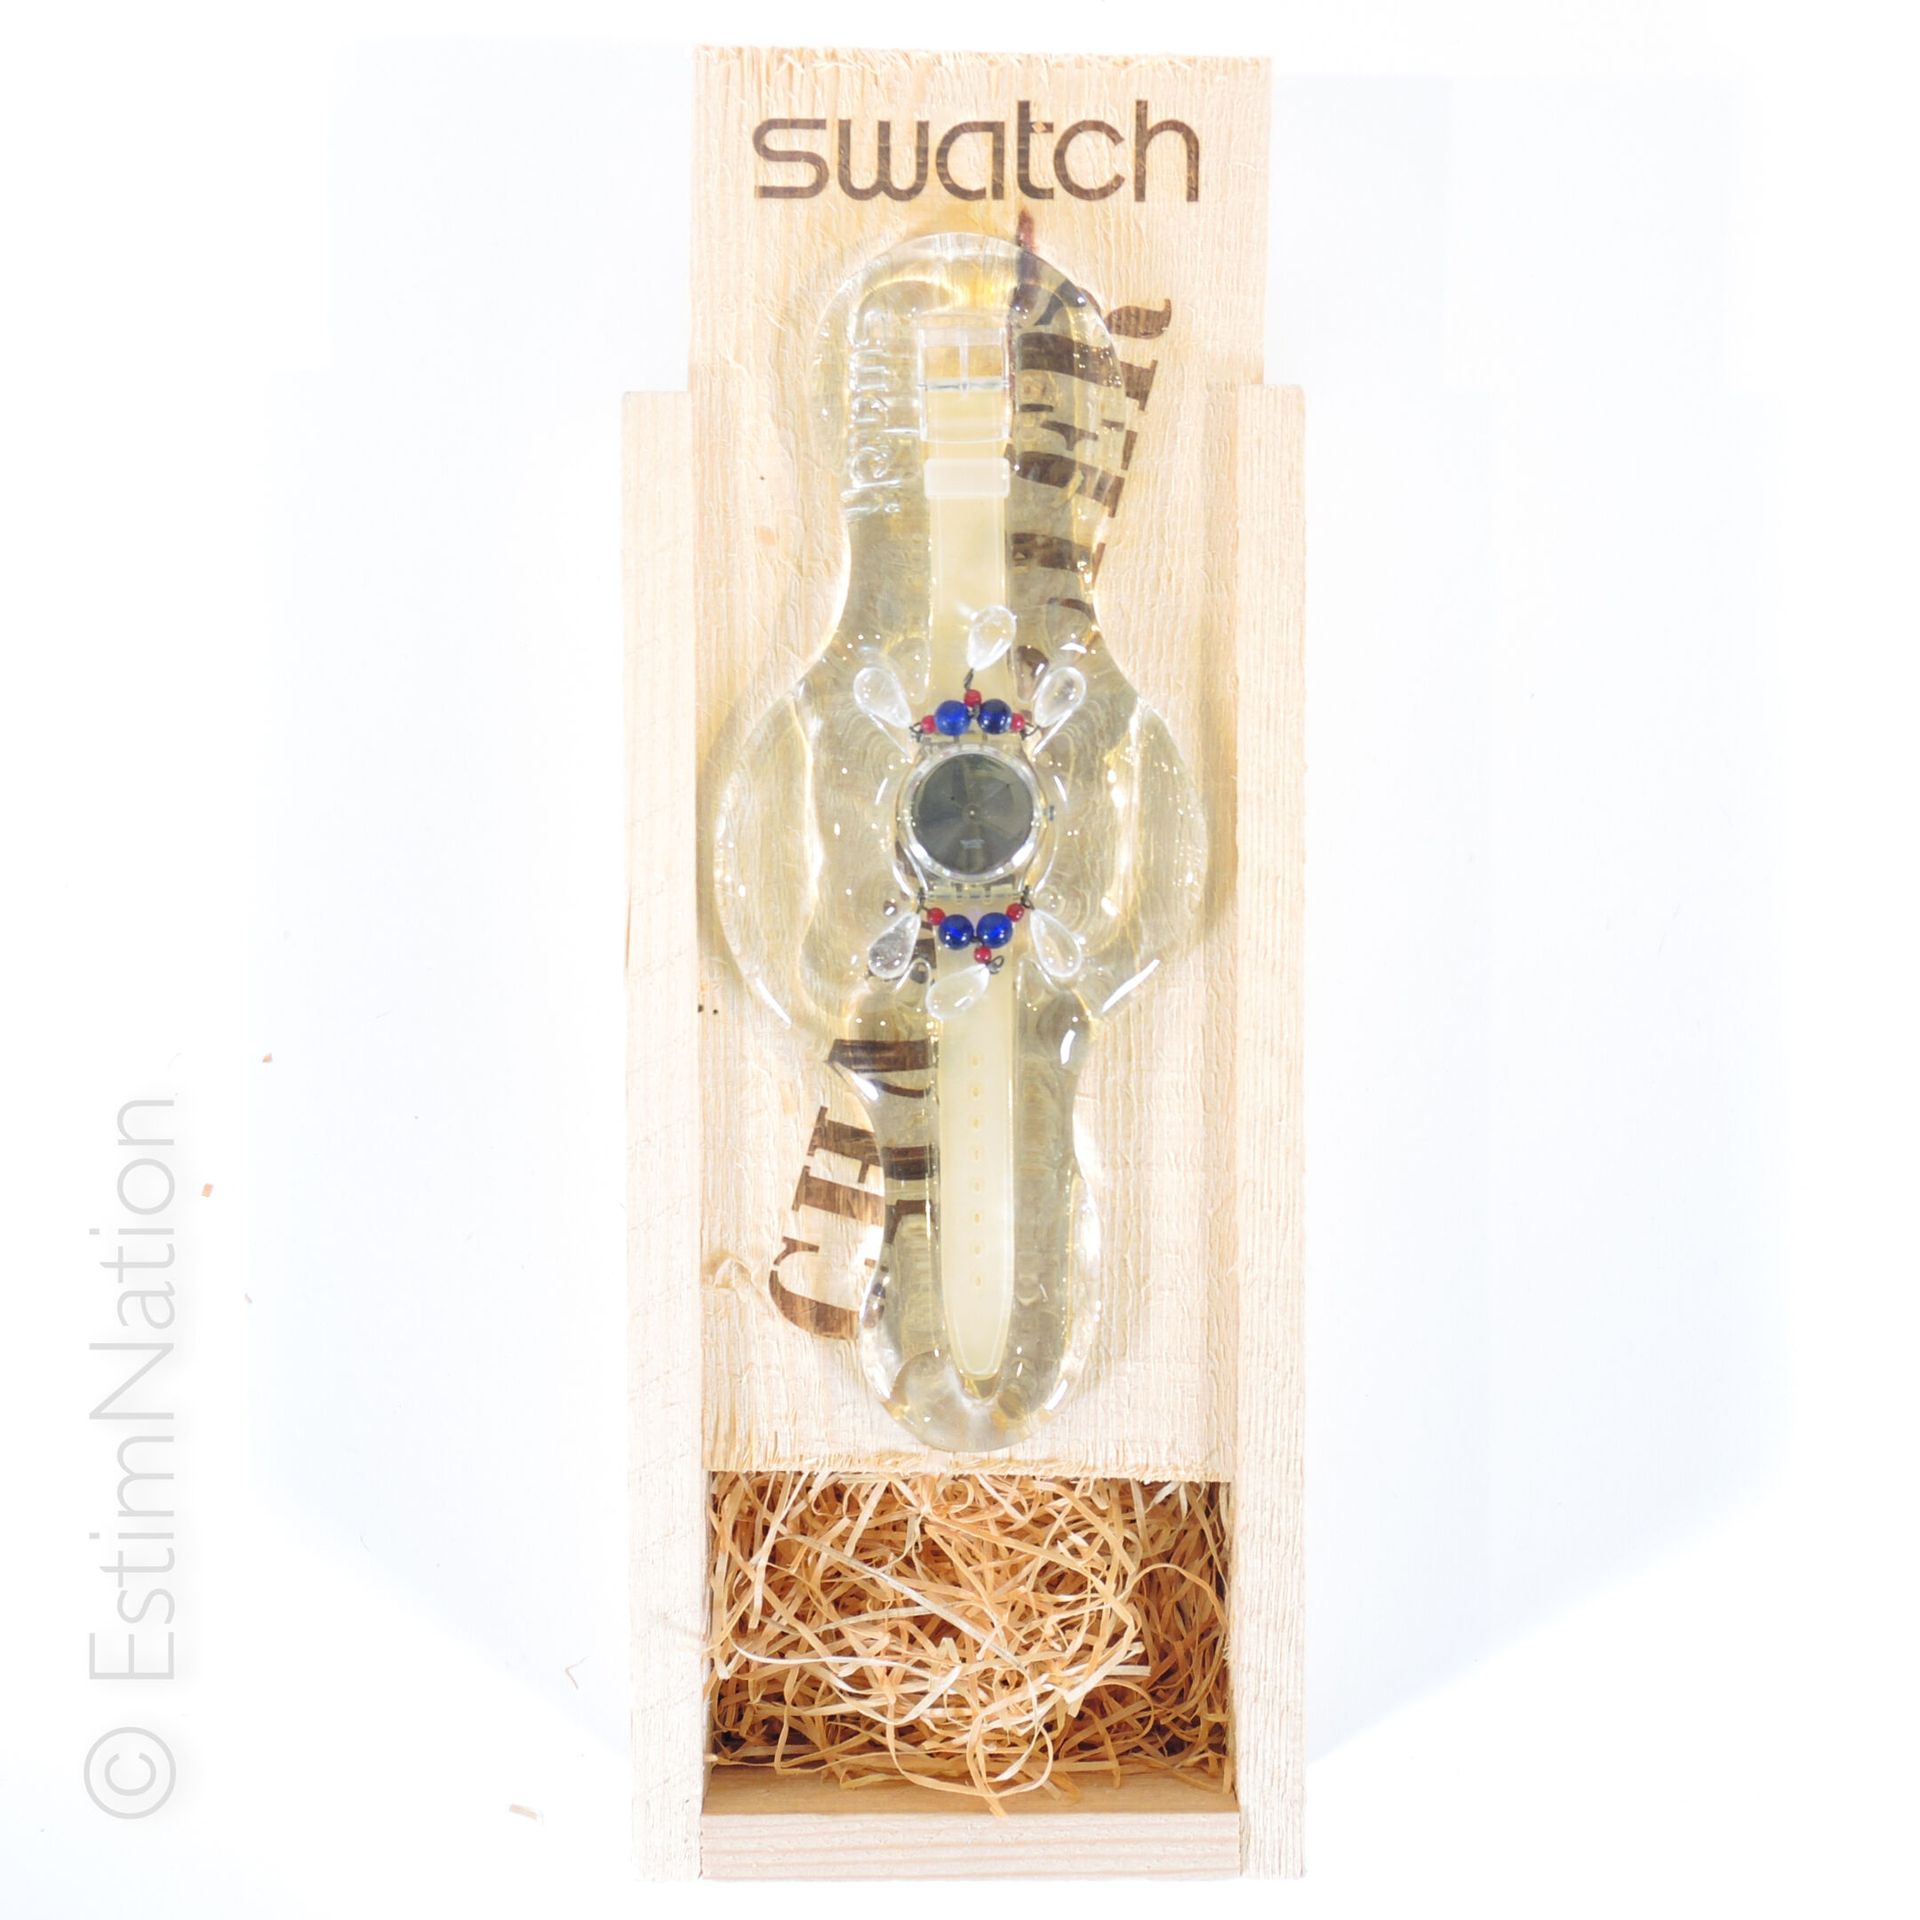 SWATCH - CHANDELIER - 1992 样品 - 枝形吊灯

特价商品: 绅士



1992年圣诞节的限量版盒子，包括一个标准型号的手表，金属表&hellip;